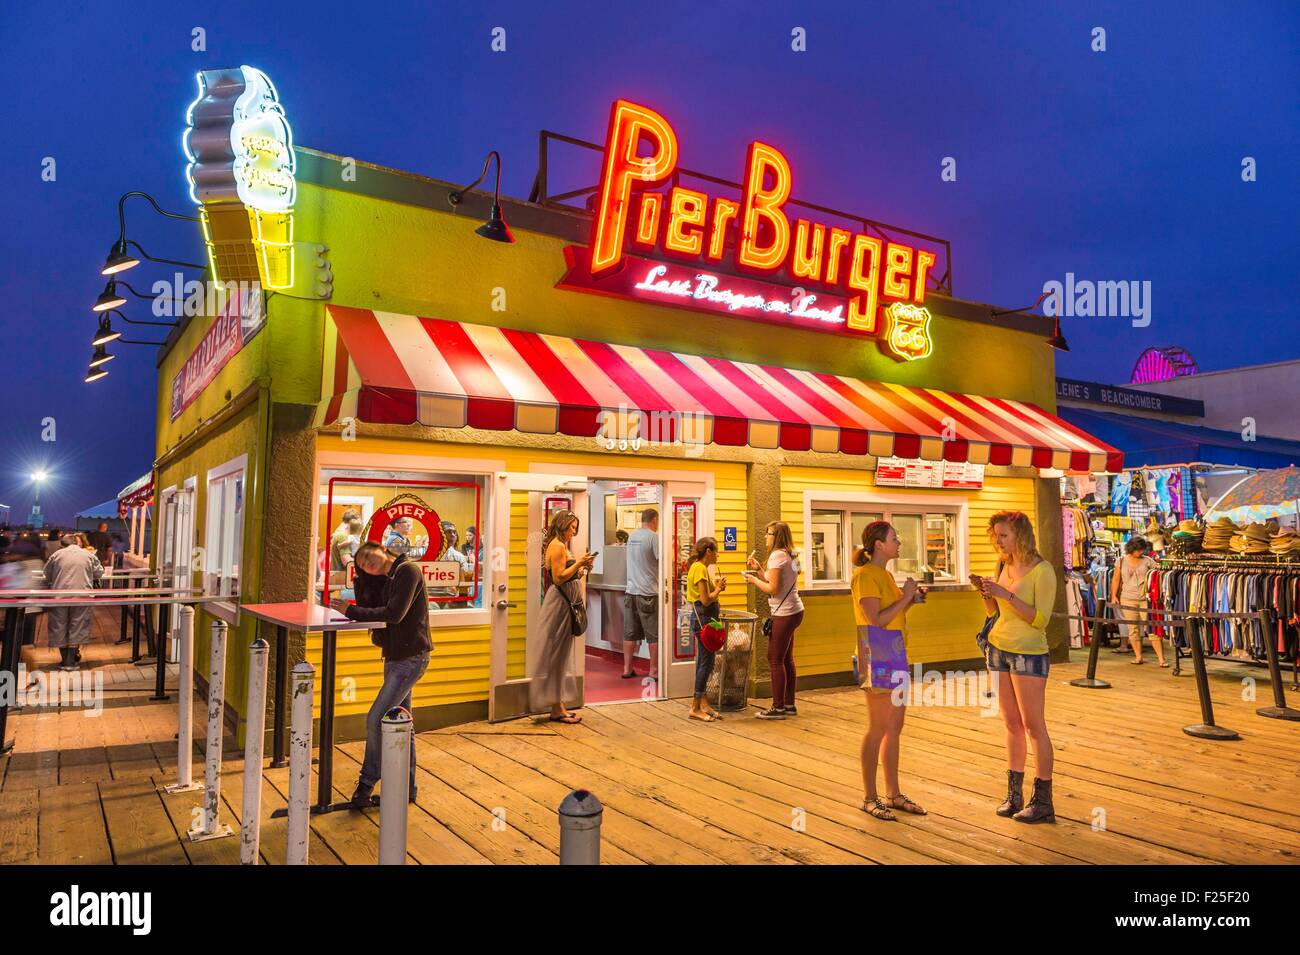 USA, California, Los Angeles, Santa Monica, Santa Monica Pier, Pier-Burger-restaurant Stockfoto